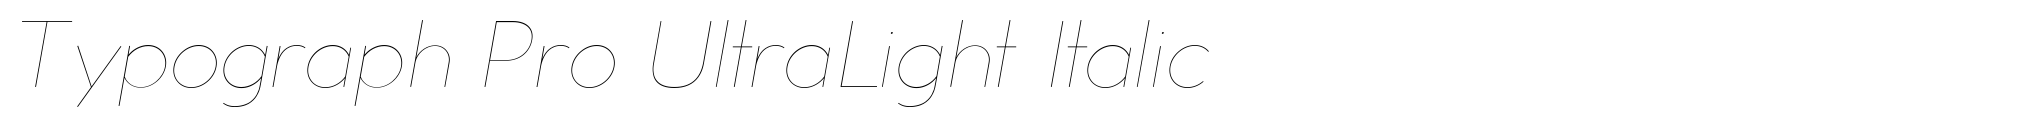 Typograph Pro UltraLight Italic image